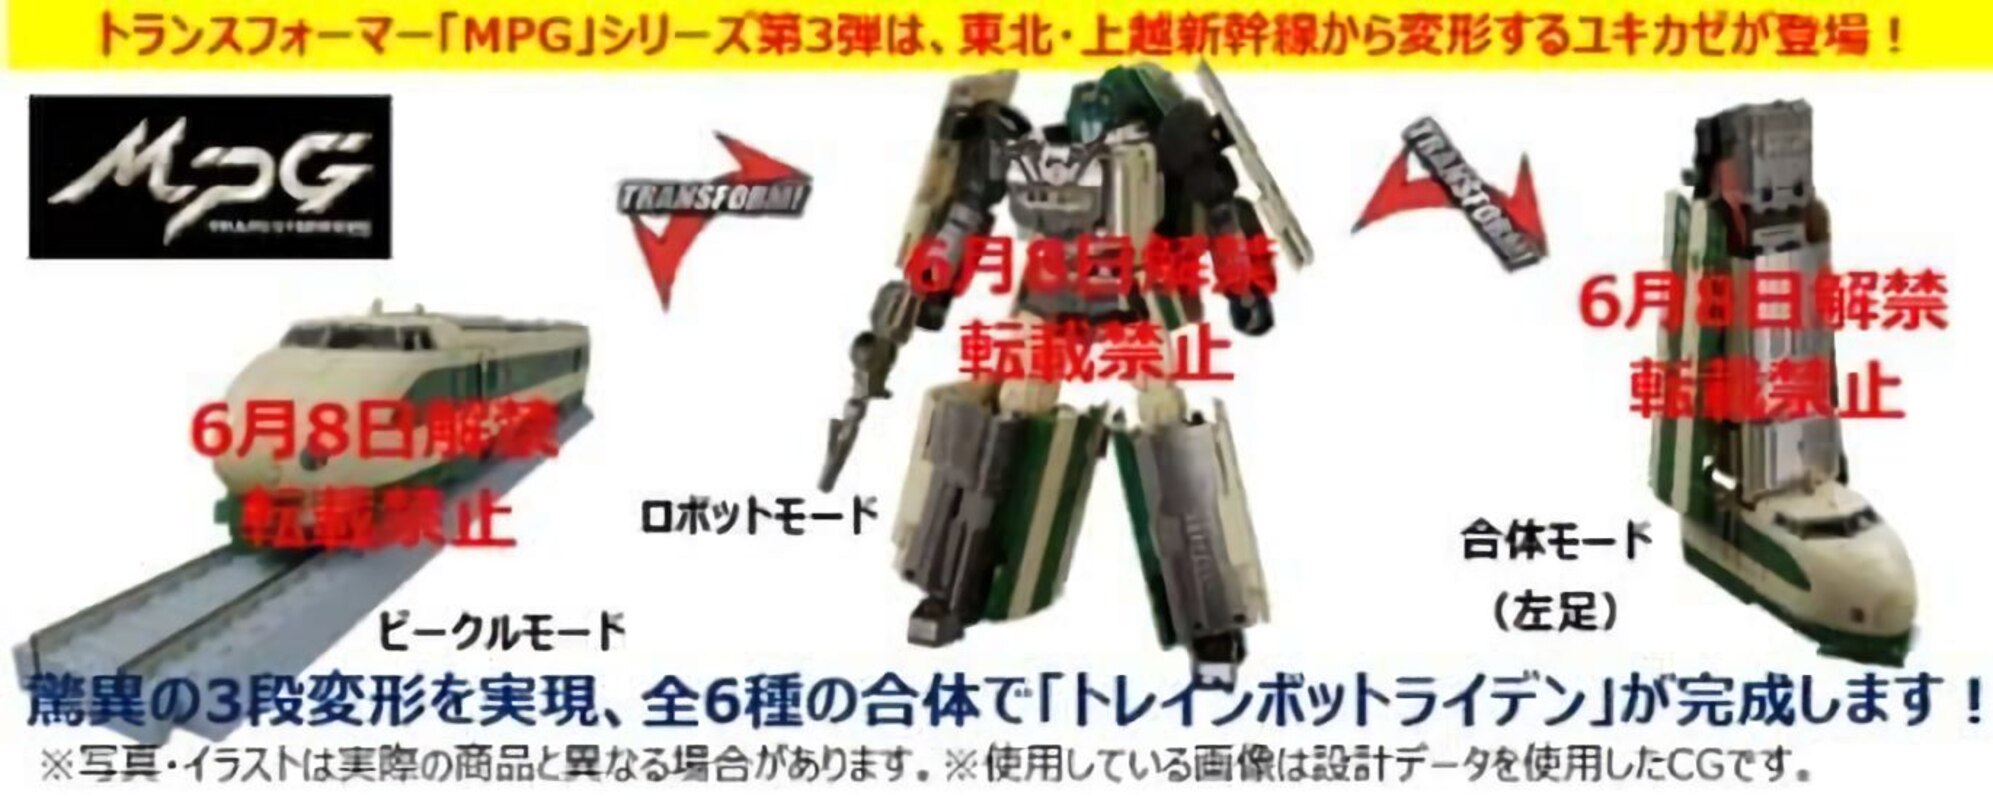 First Look Takara TOMY Transformers Masterpiece MPG-03 Yukikaze Images